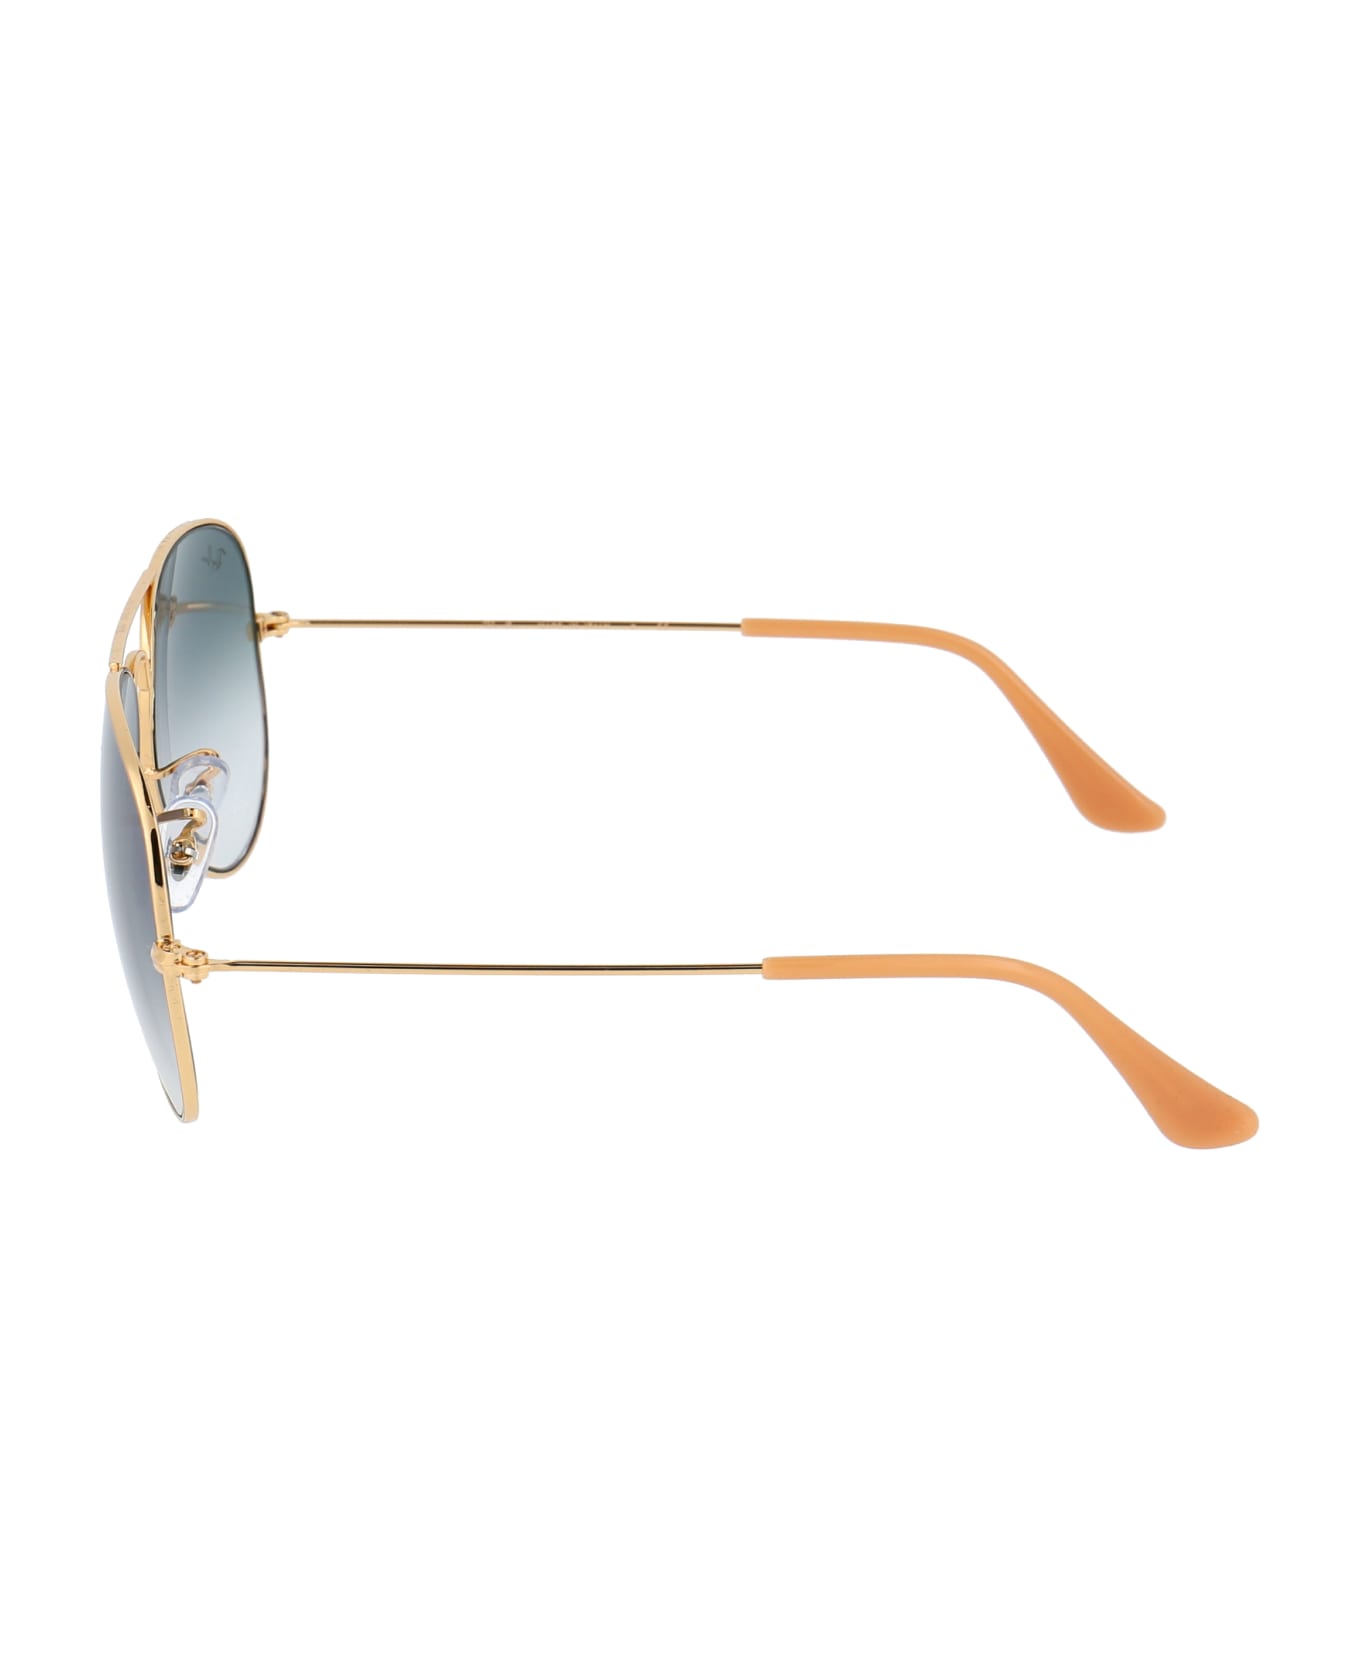 Ray-Ban Aviator Sunglasses - 001/3F GOLD